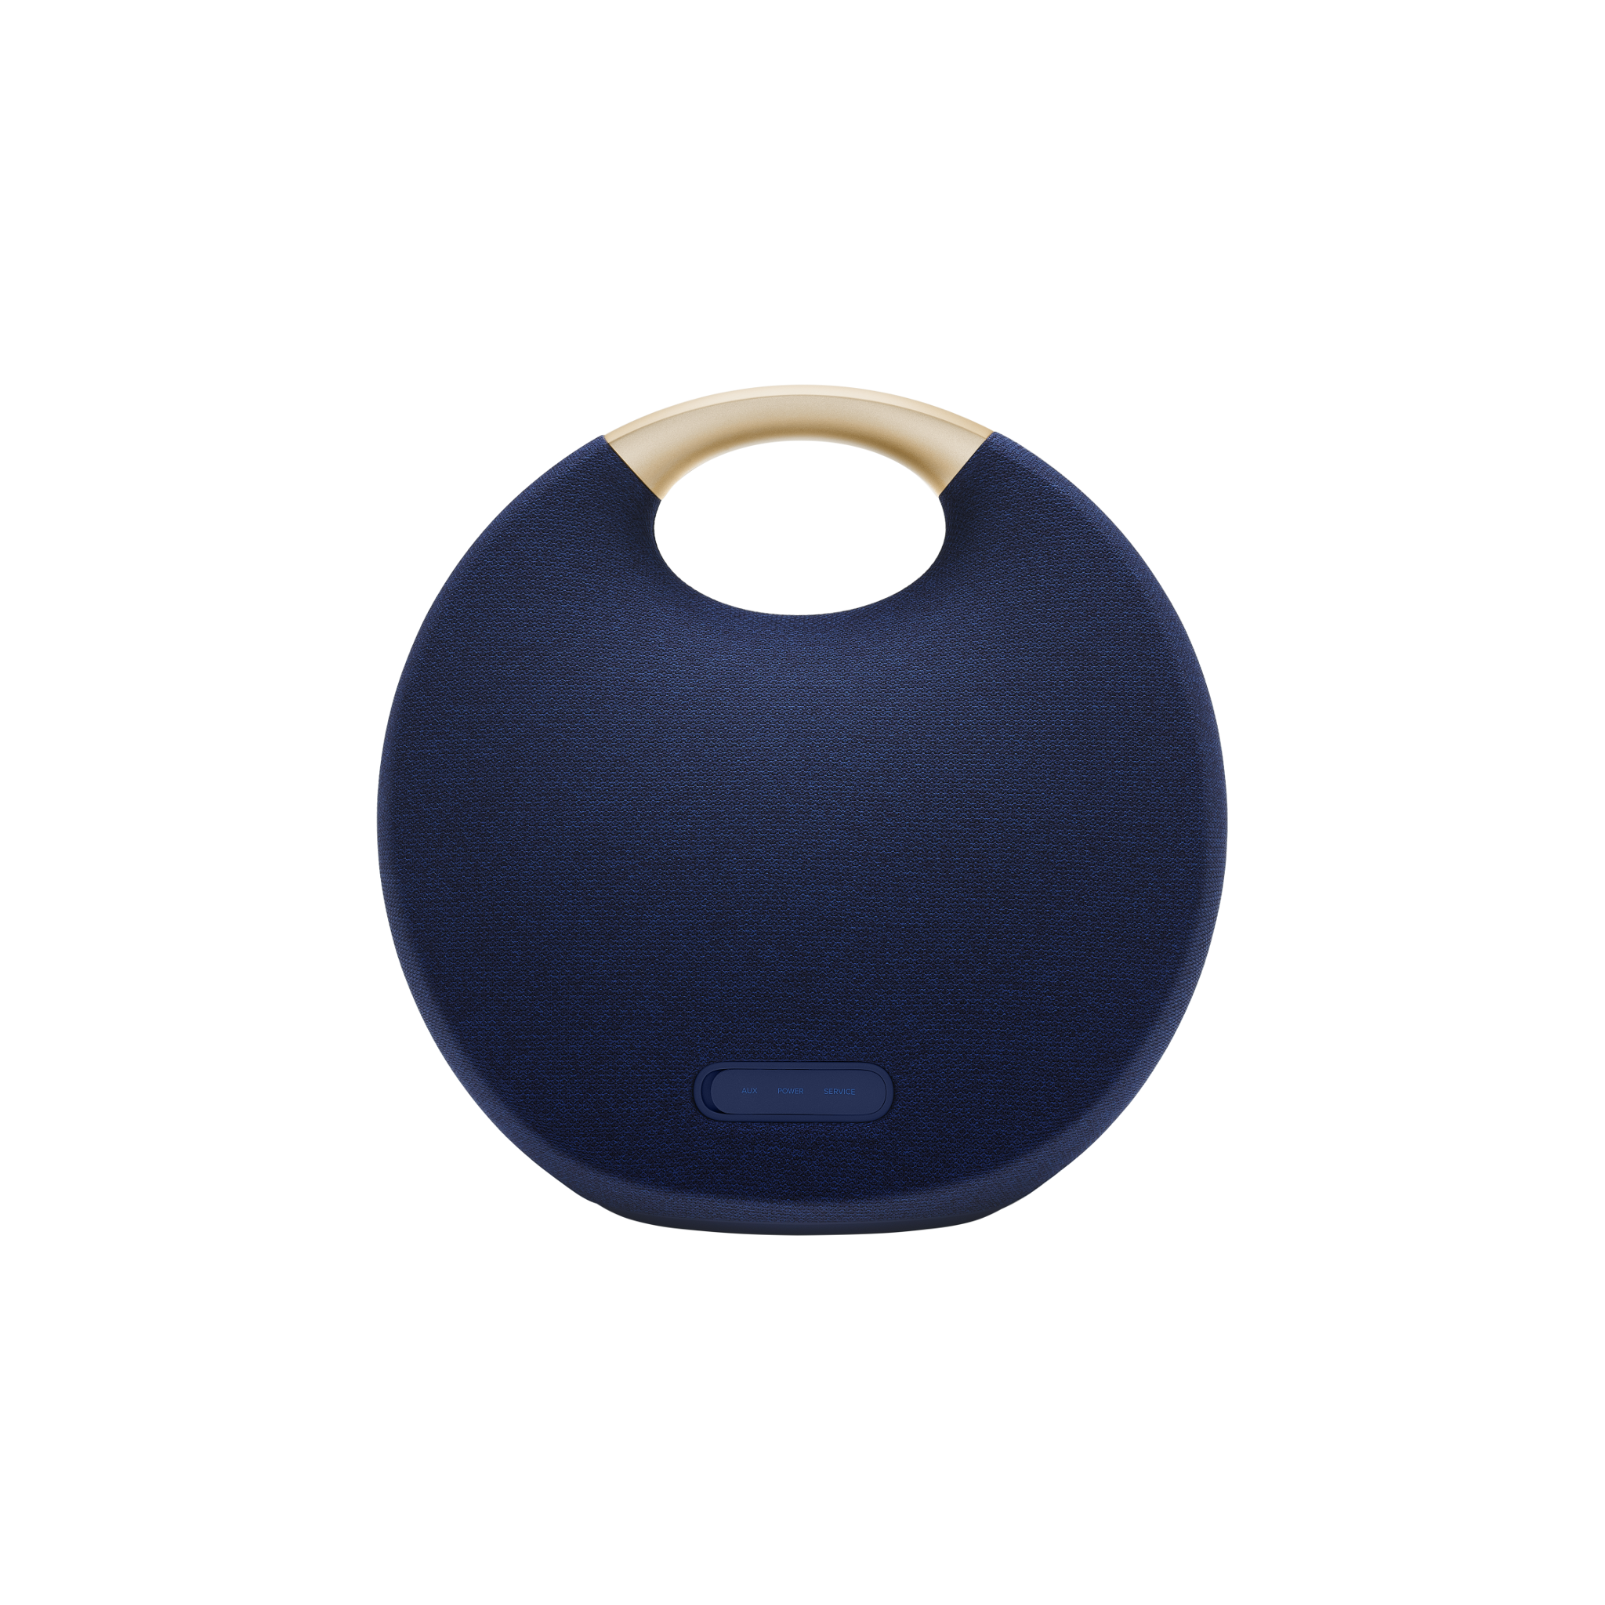 Onyx Studio 6 - Blue - Portable Bluetooth speaker - Back